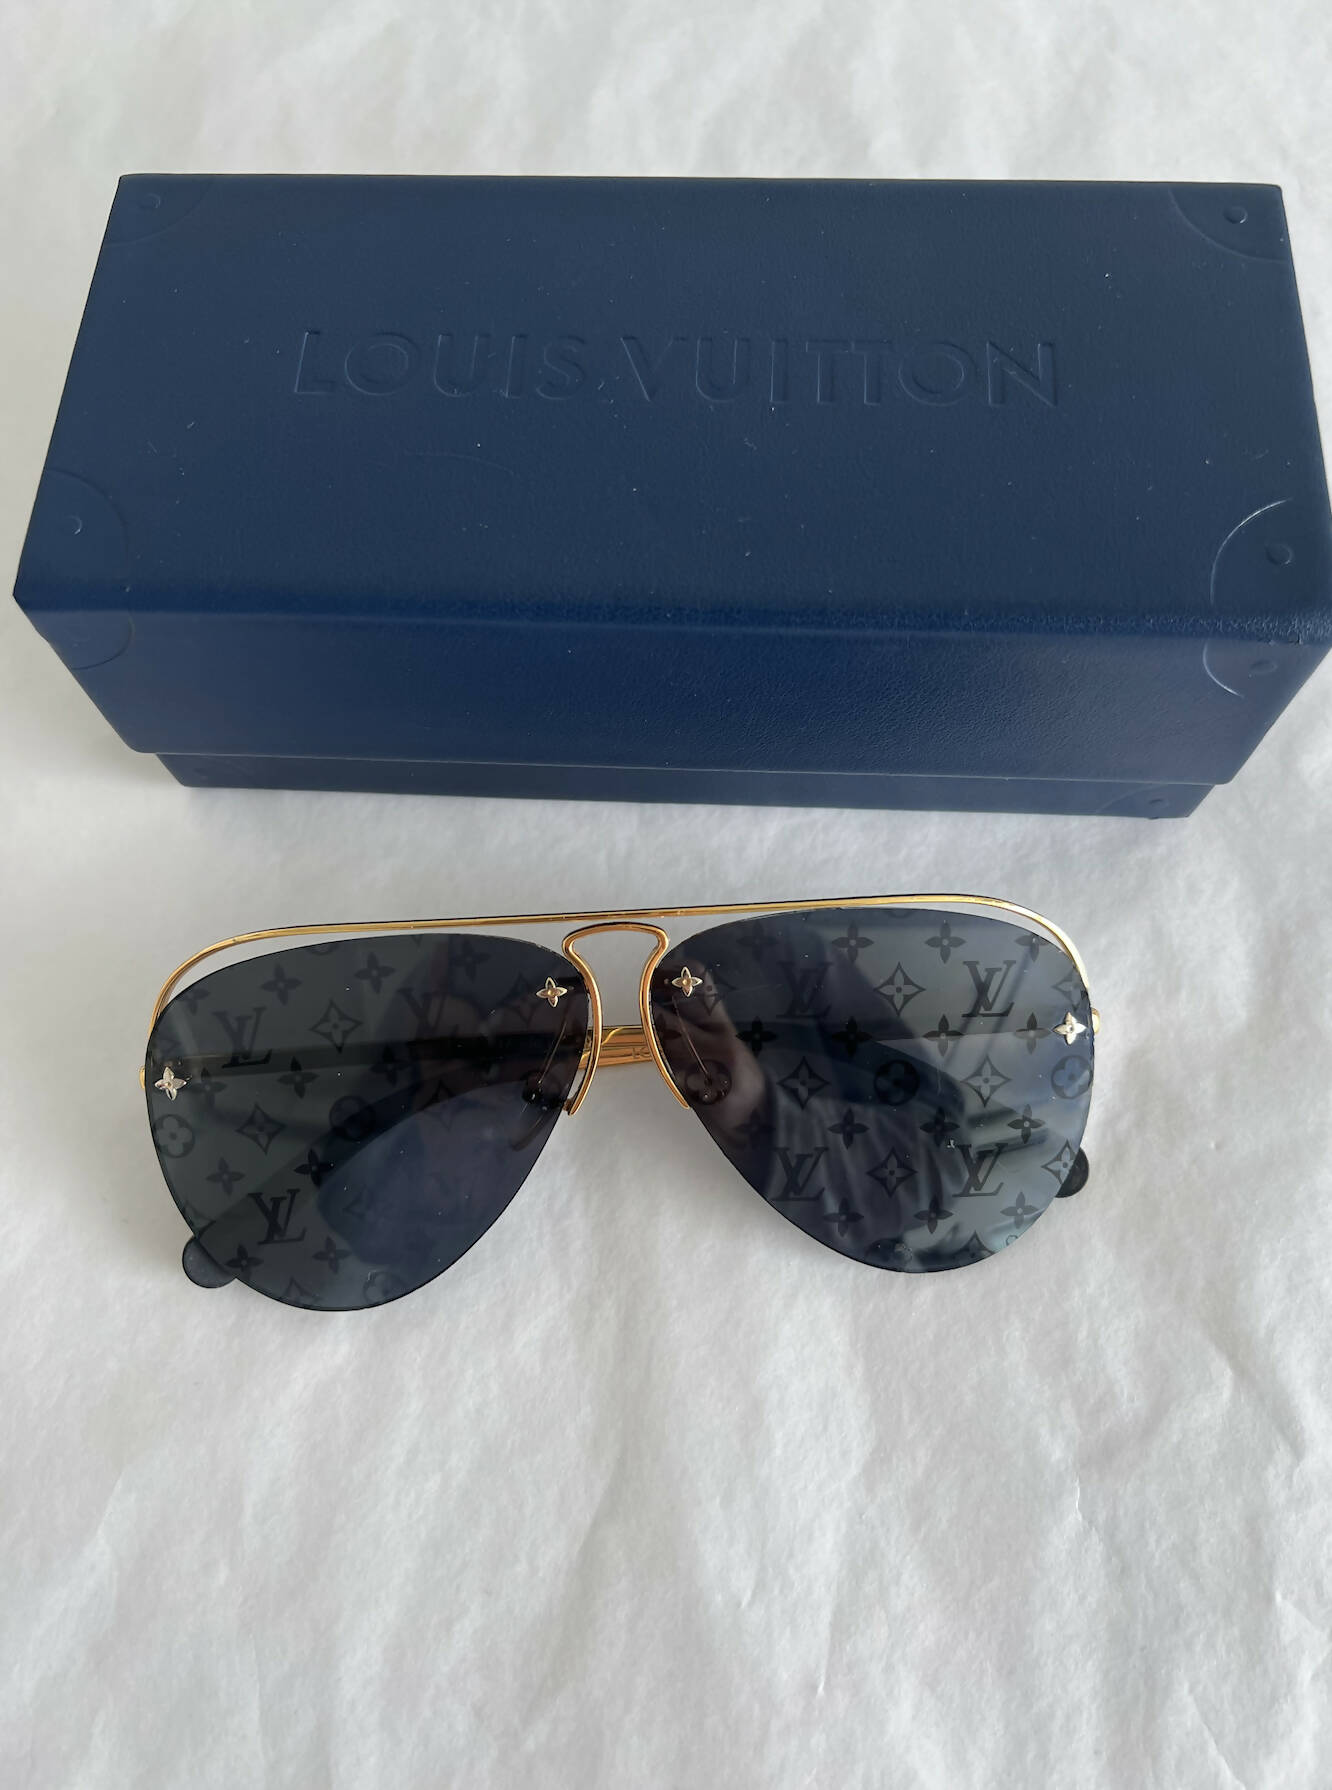 Louis Vuitton Men's FLuorescent Yellow Clockwise Sunglasses Z1067W –  Luxuria & Co.